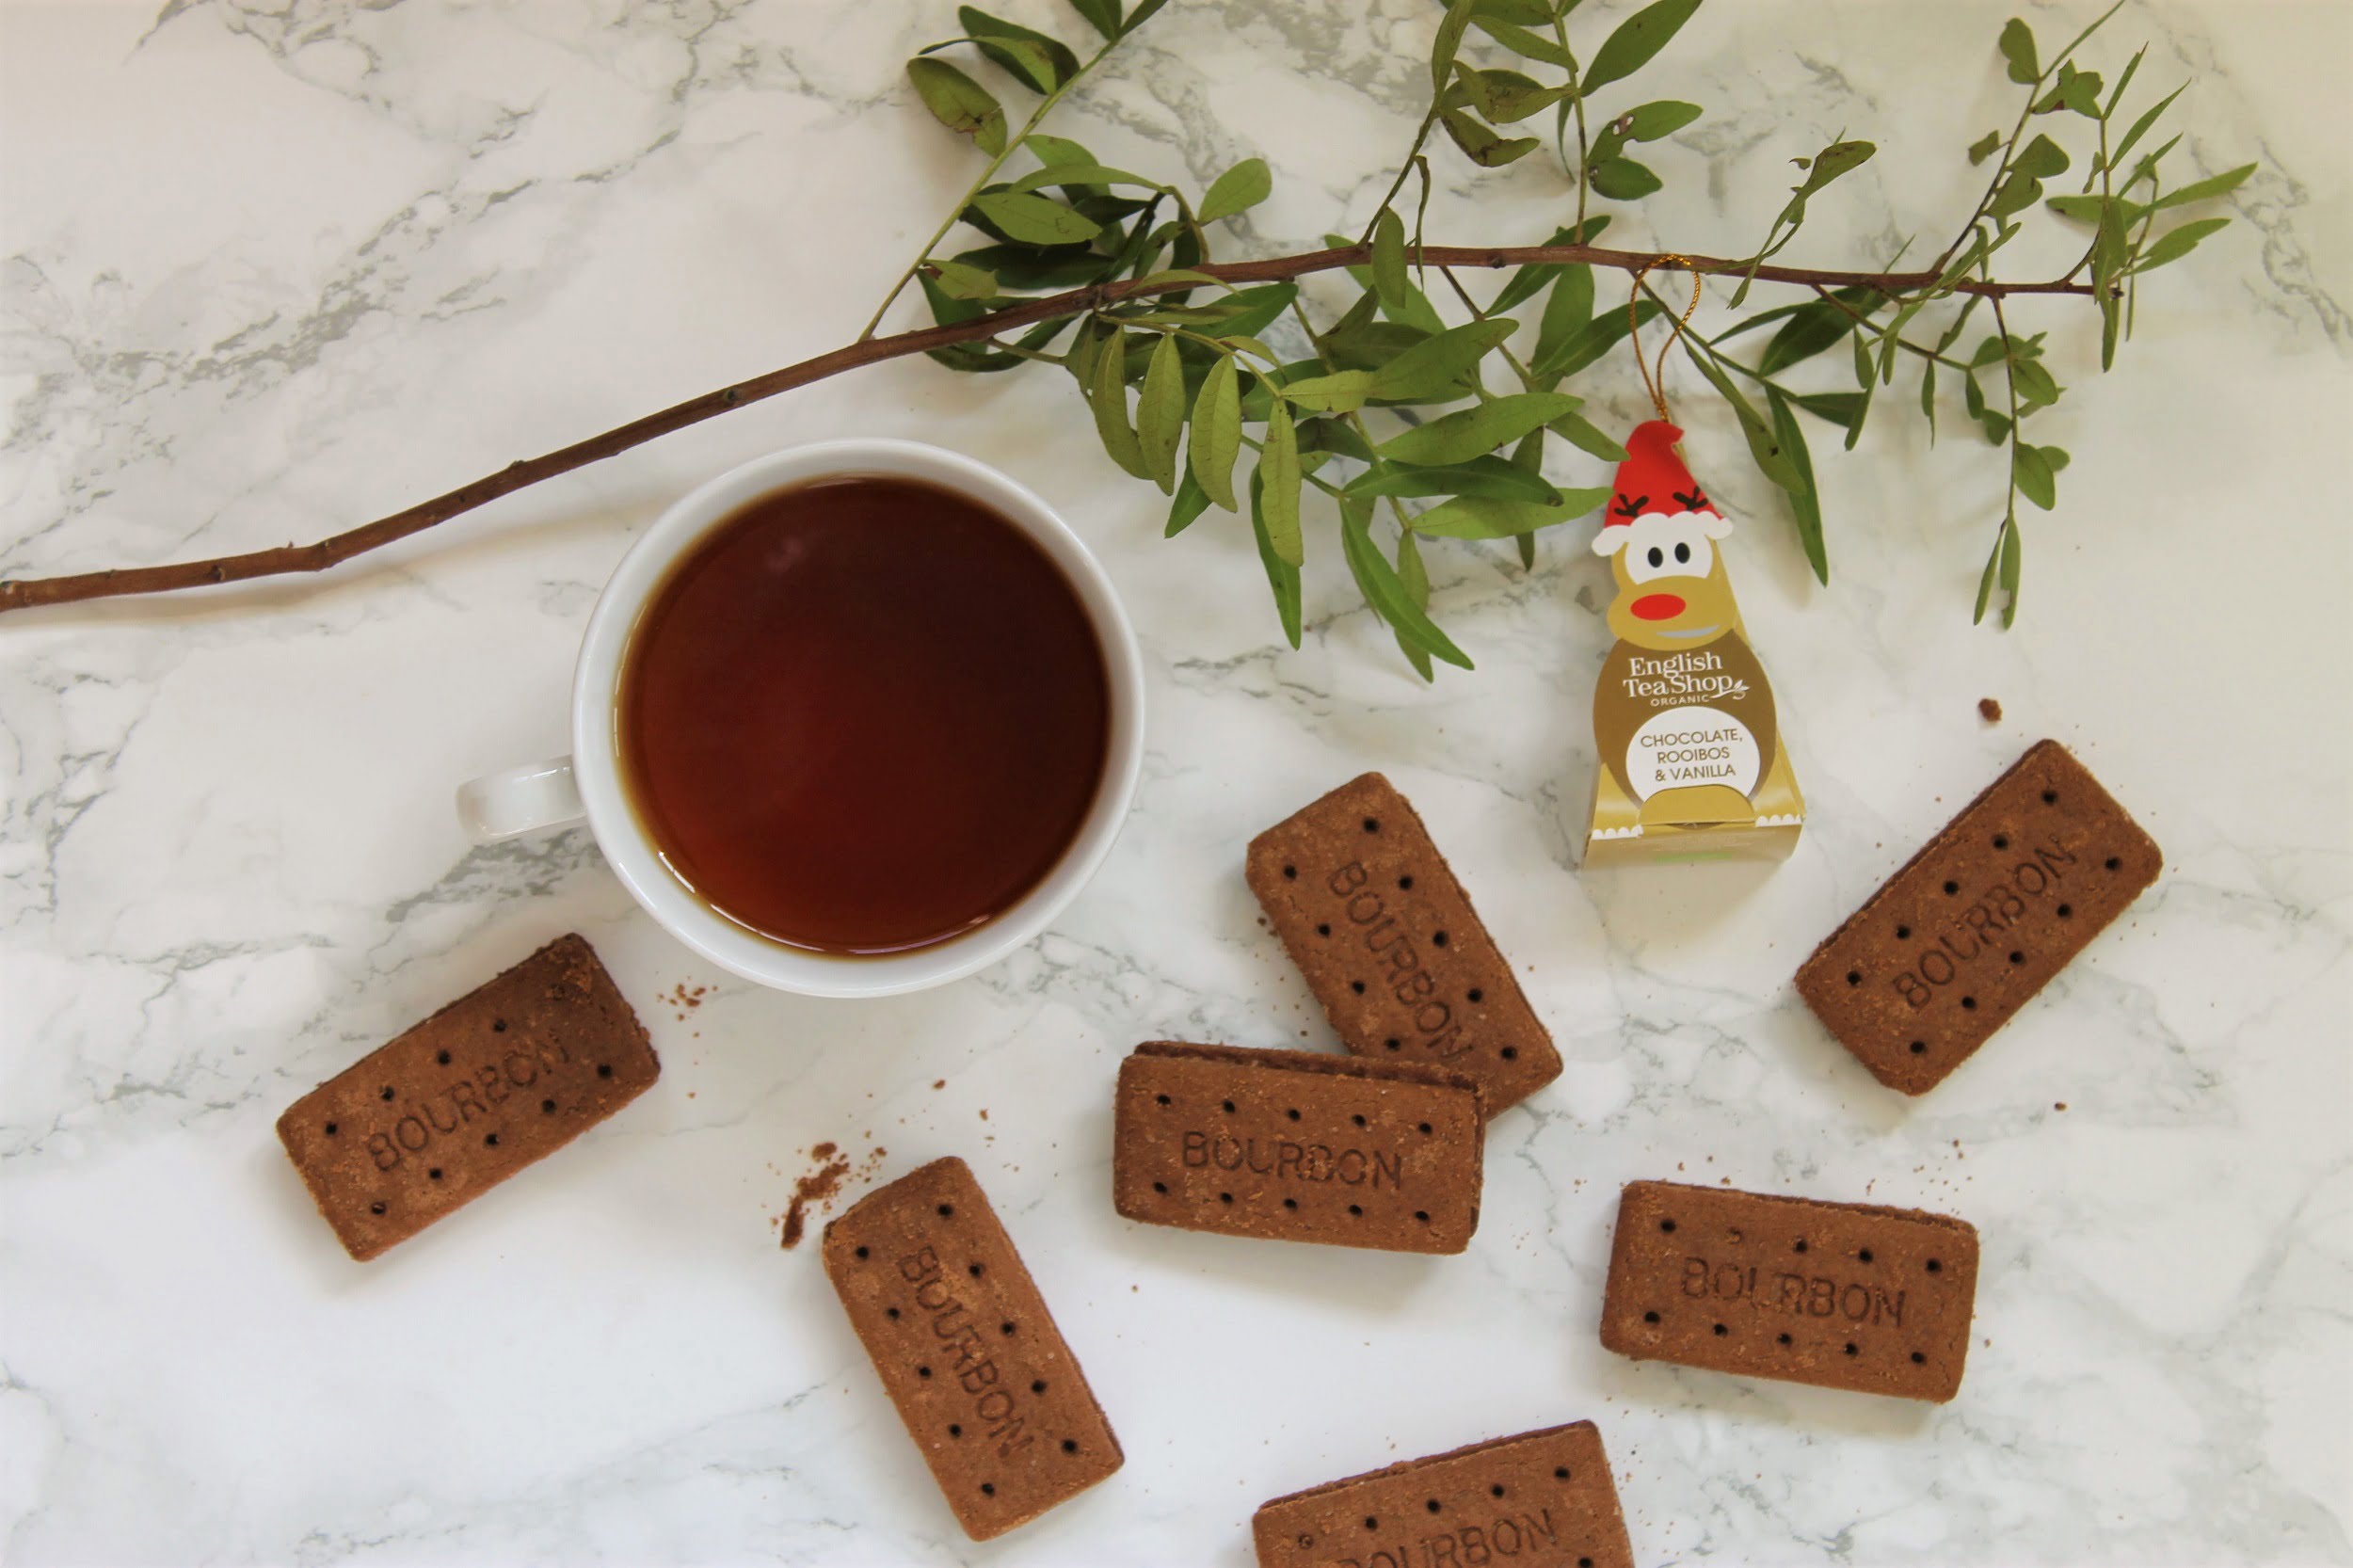 English Tea Shop Chocolate, Rooibos & Vanilla Tea ReviewEnglish Tea Shop Chocolate, Rooibos & Vanilla Tea Review